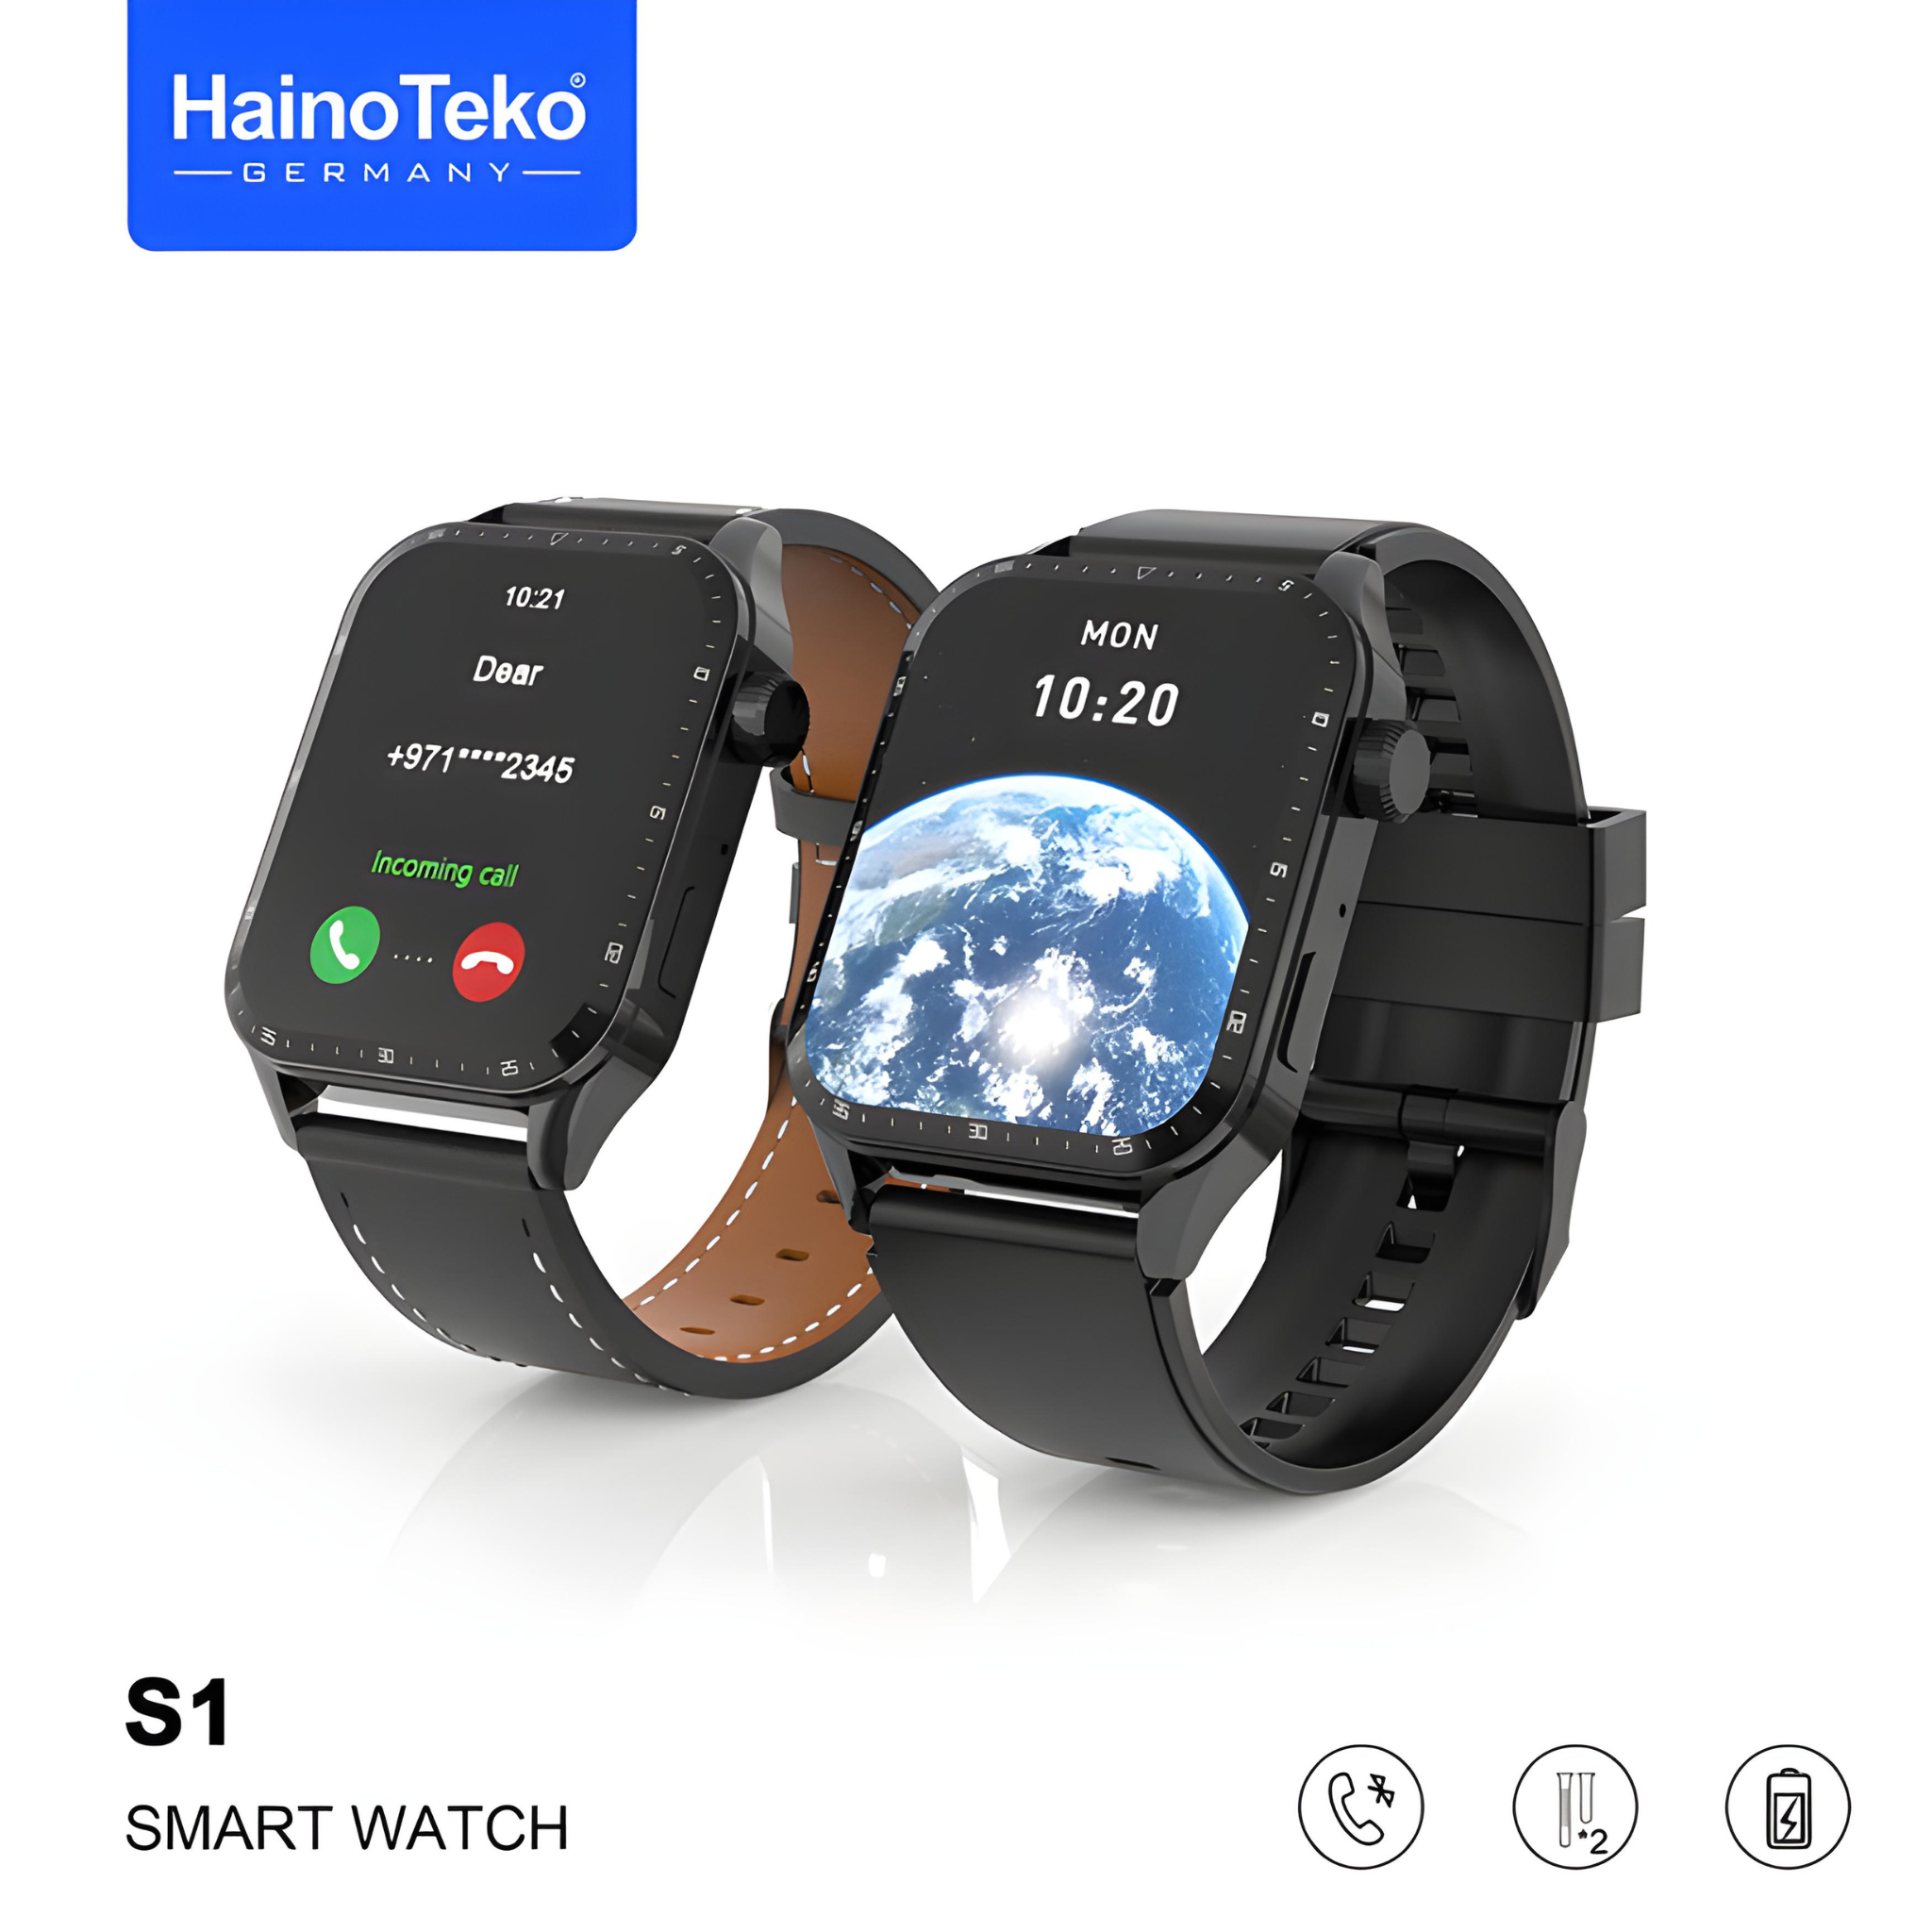  Haino Teko Germany, Smartwatch Strap, 2-Pack, Interchangeable, Durable, Comfortable, Stylish, Fashionable, Smartwatch Accessories, Haino Teko Germany S1